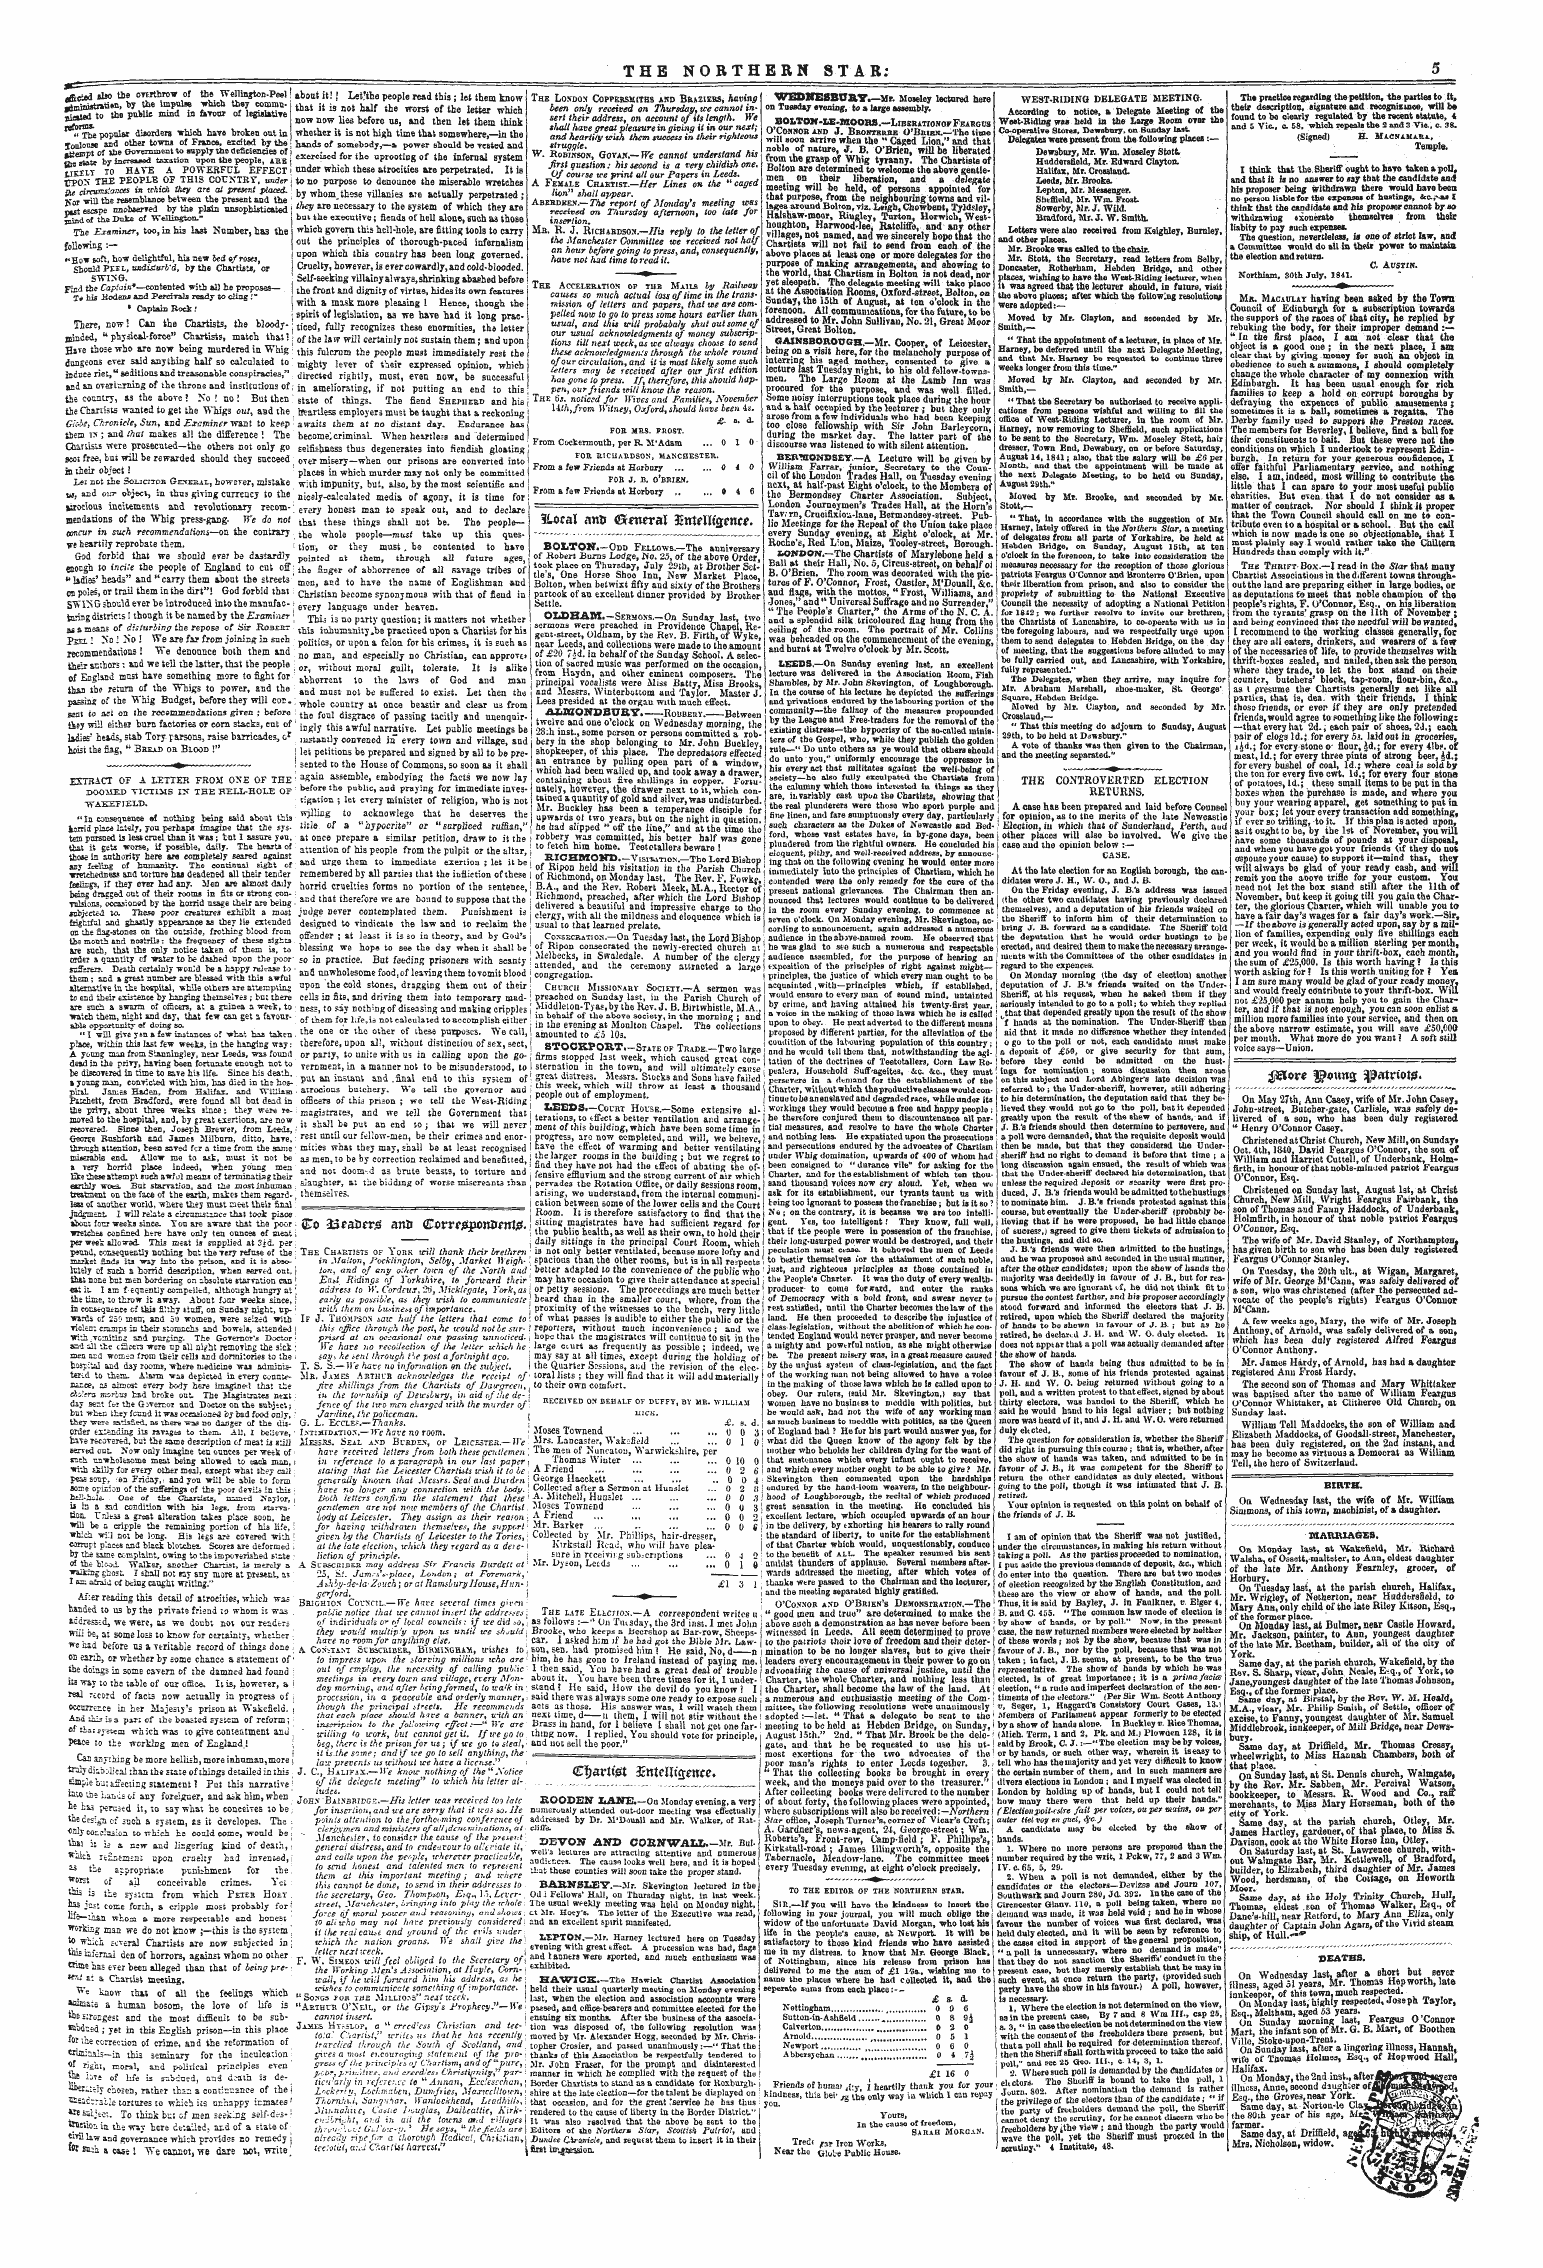 Northern Star (1837-1852): jS F Y, 1st edition - 3utaj Amr &Lt;Br*Ueral Suten&Eiw.